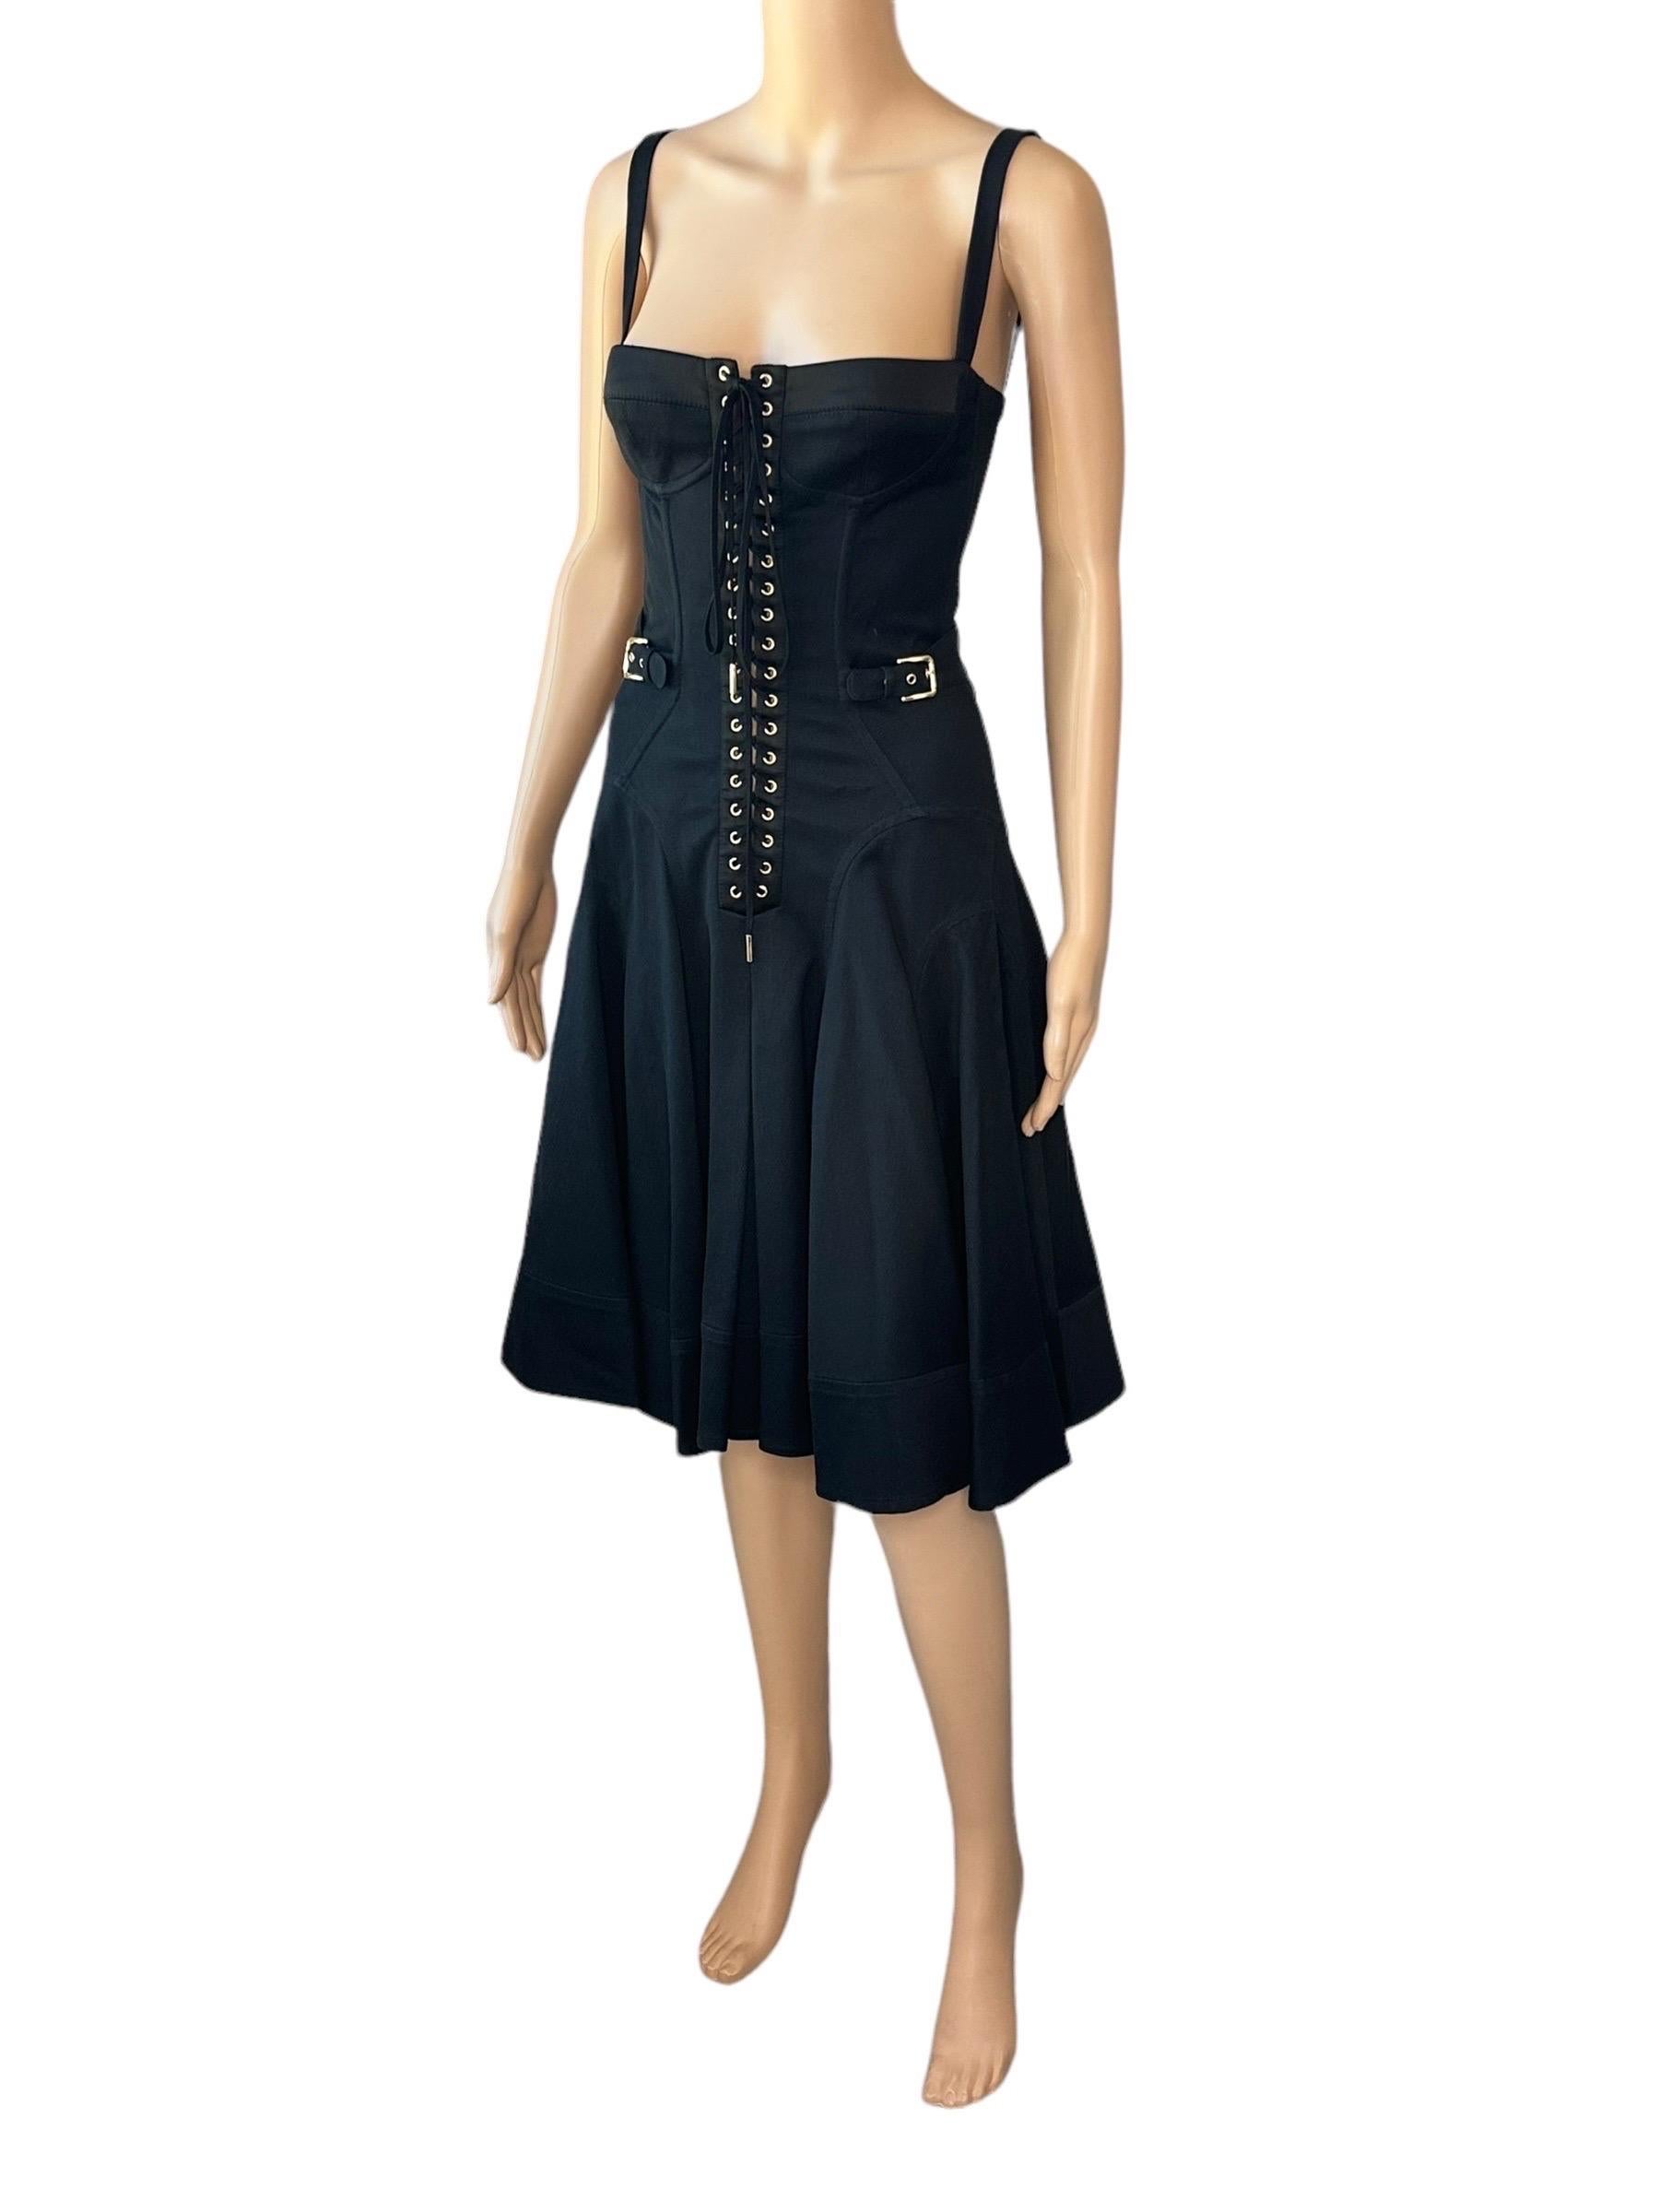 Women's Dolce & Gabbana S/S 2007 Unworn Corset Lace-Up Bustier Black Dress For Sale